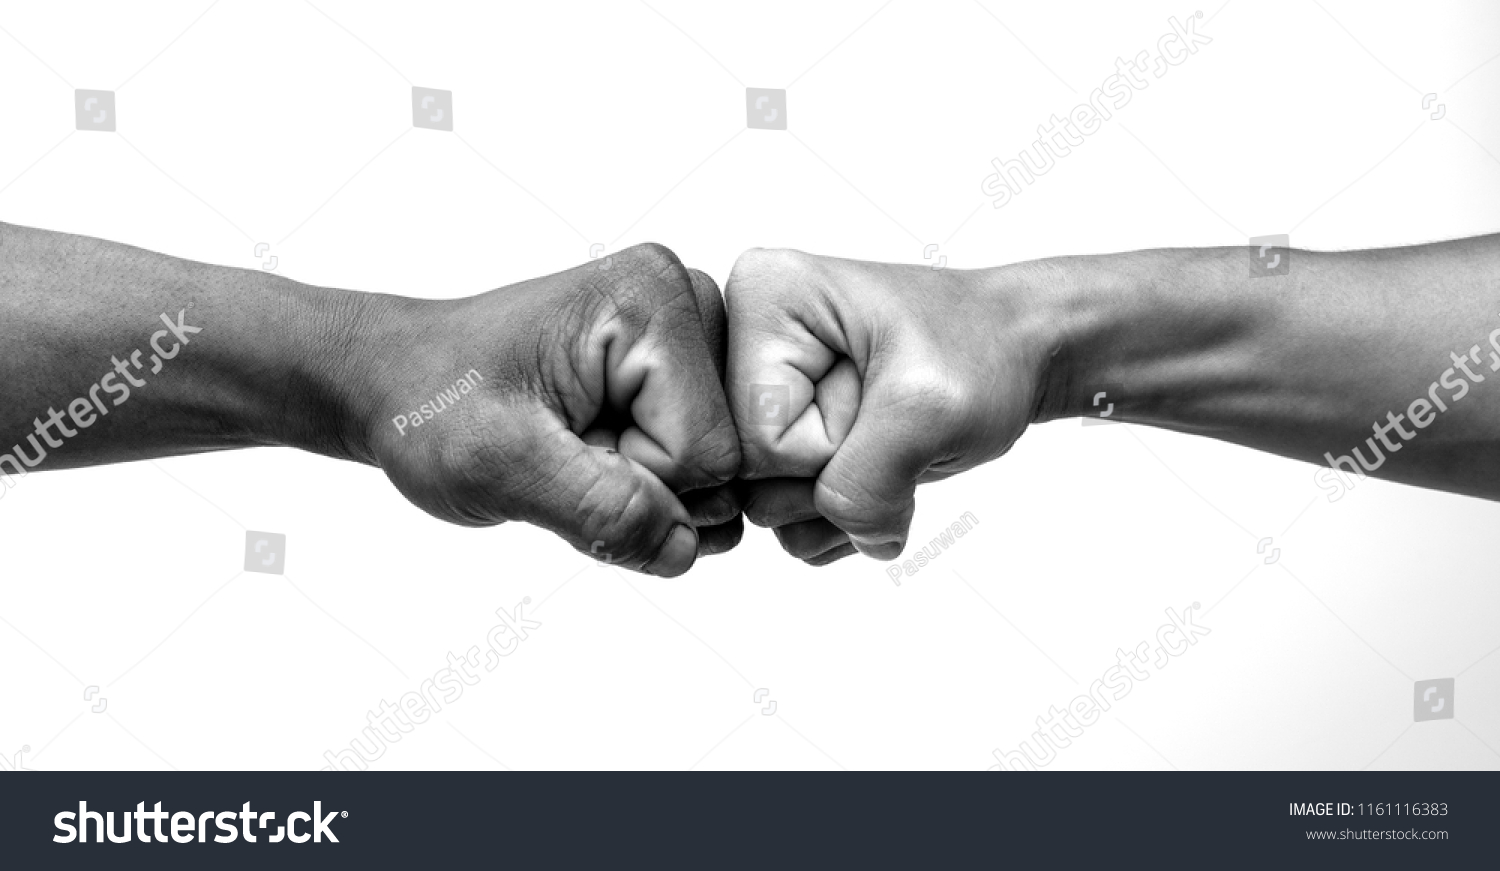 Man giving fist bump, monochrome, black and white image.  #1161116383